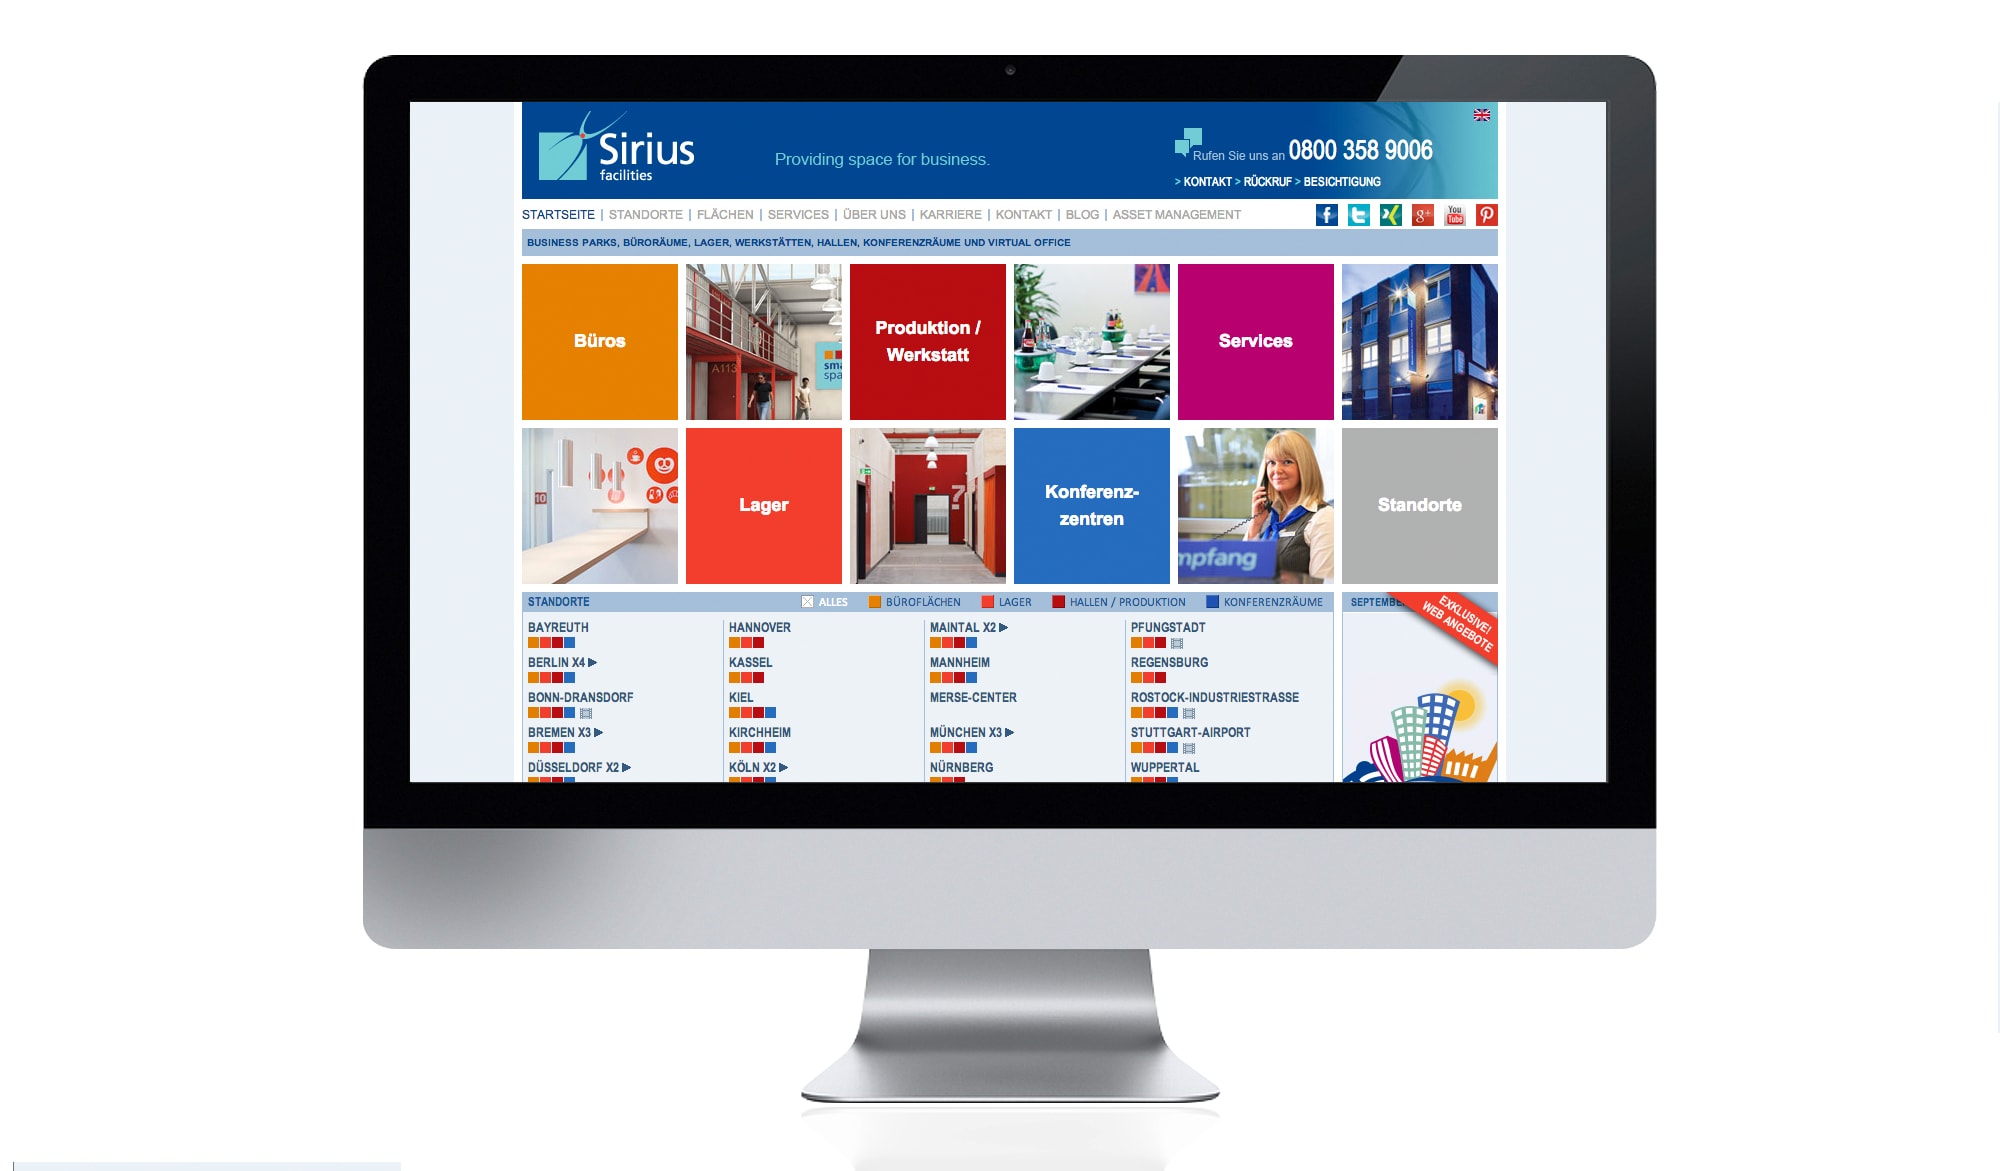 Sirius Facilities website - home page